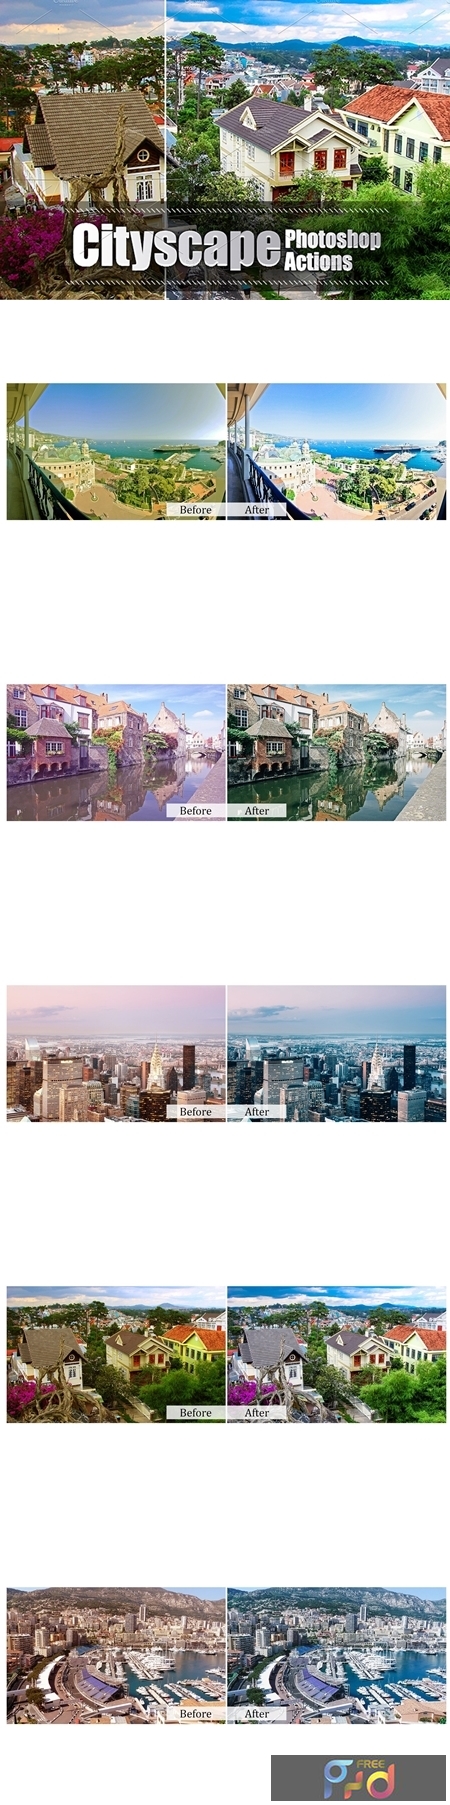 30 Cityscape Photoshop Actions 3937117 1